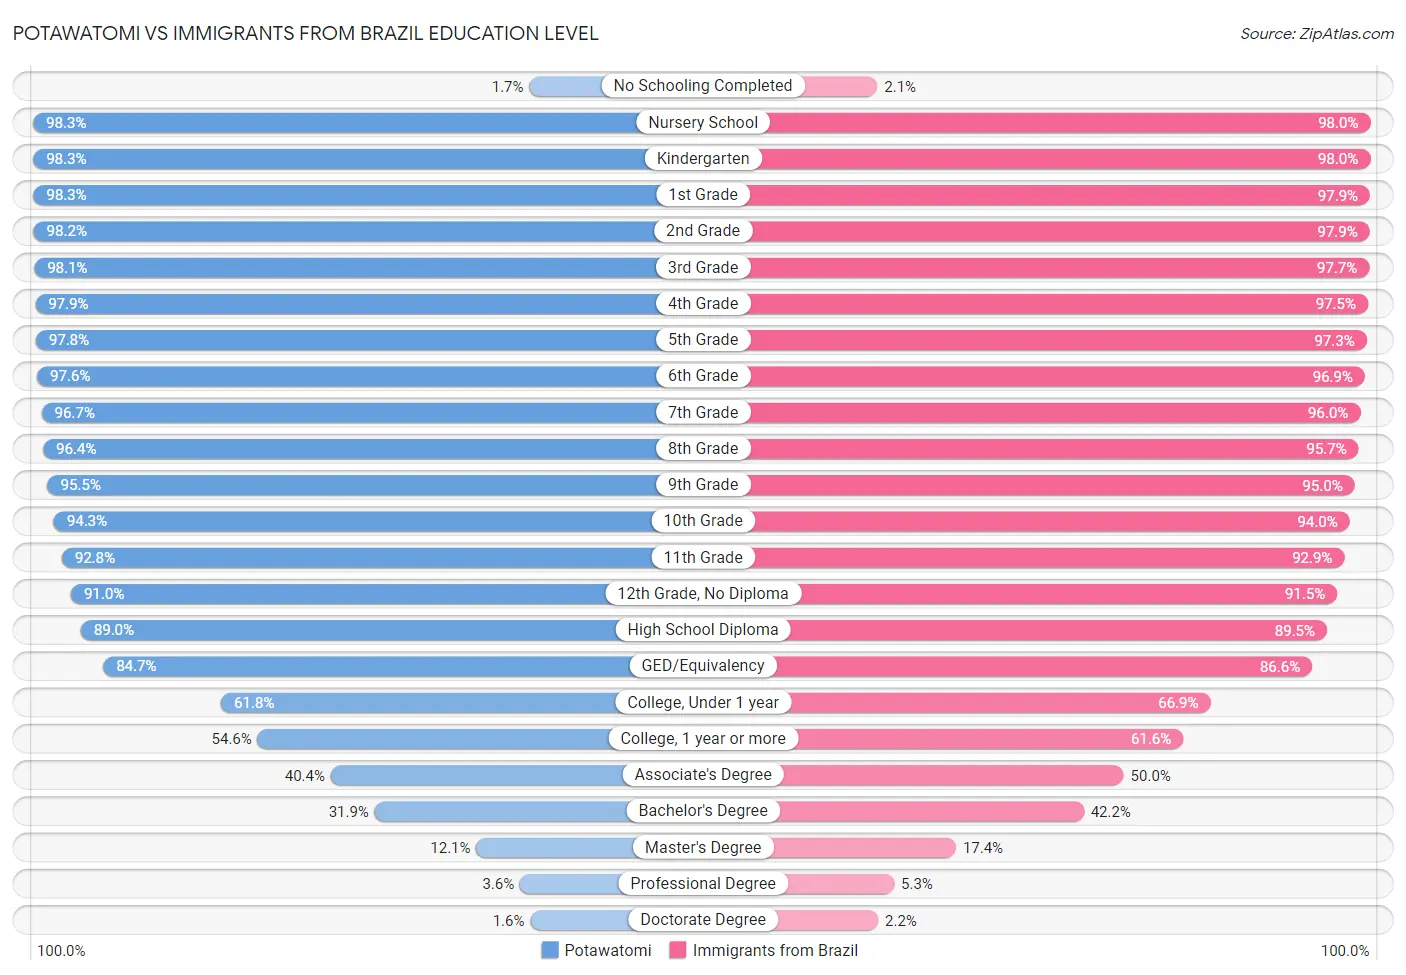 Potawatomi vs Immigrants from Brazil Education Level